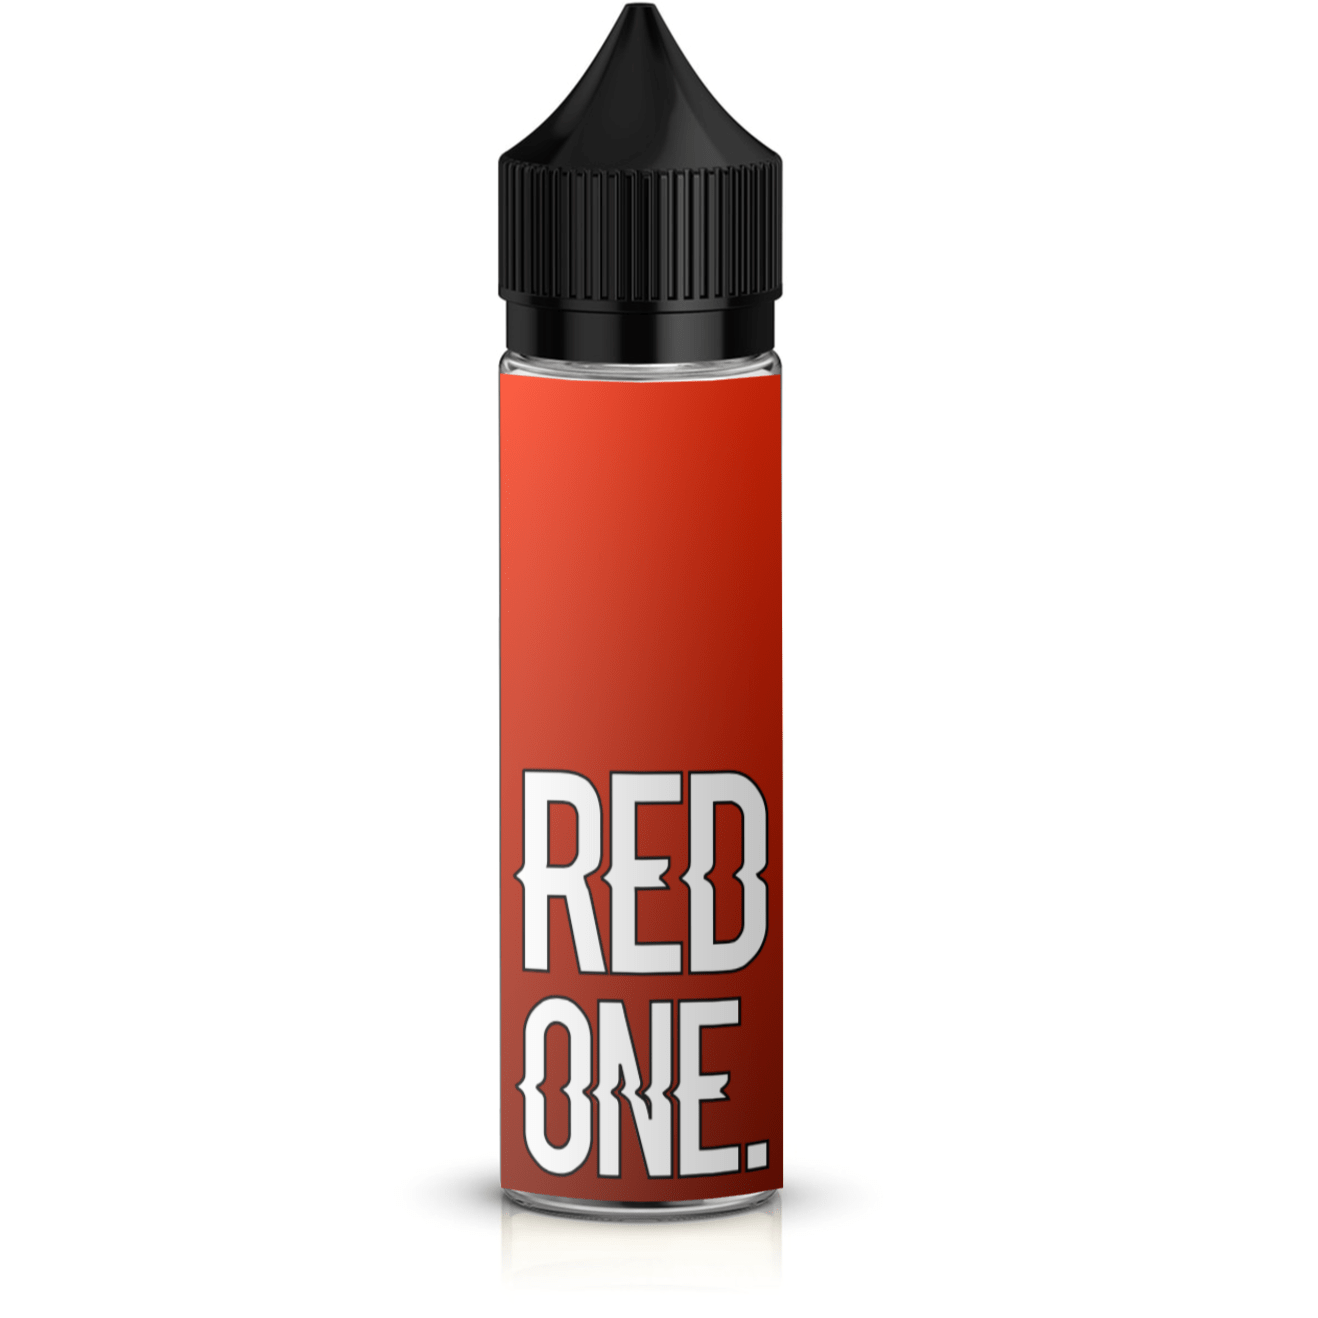 The One - Red One 60ml Longfill E-Liquid - The British Vape Company